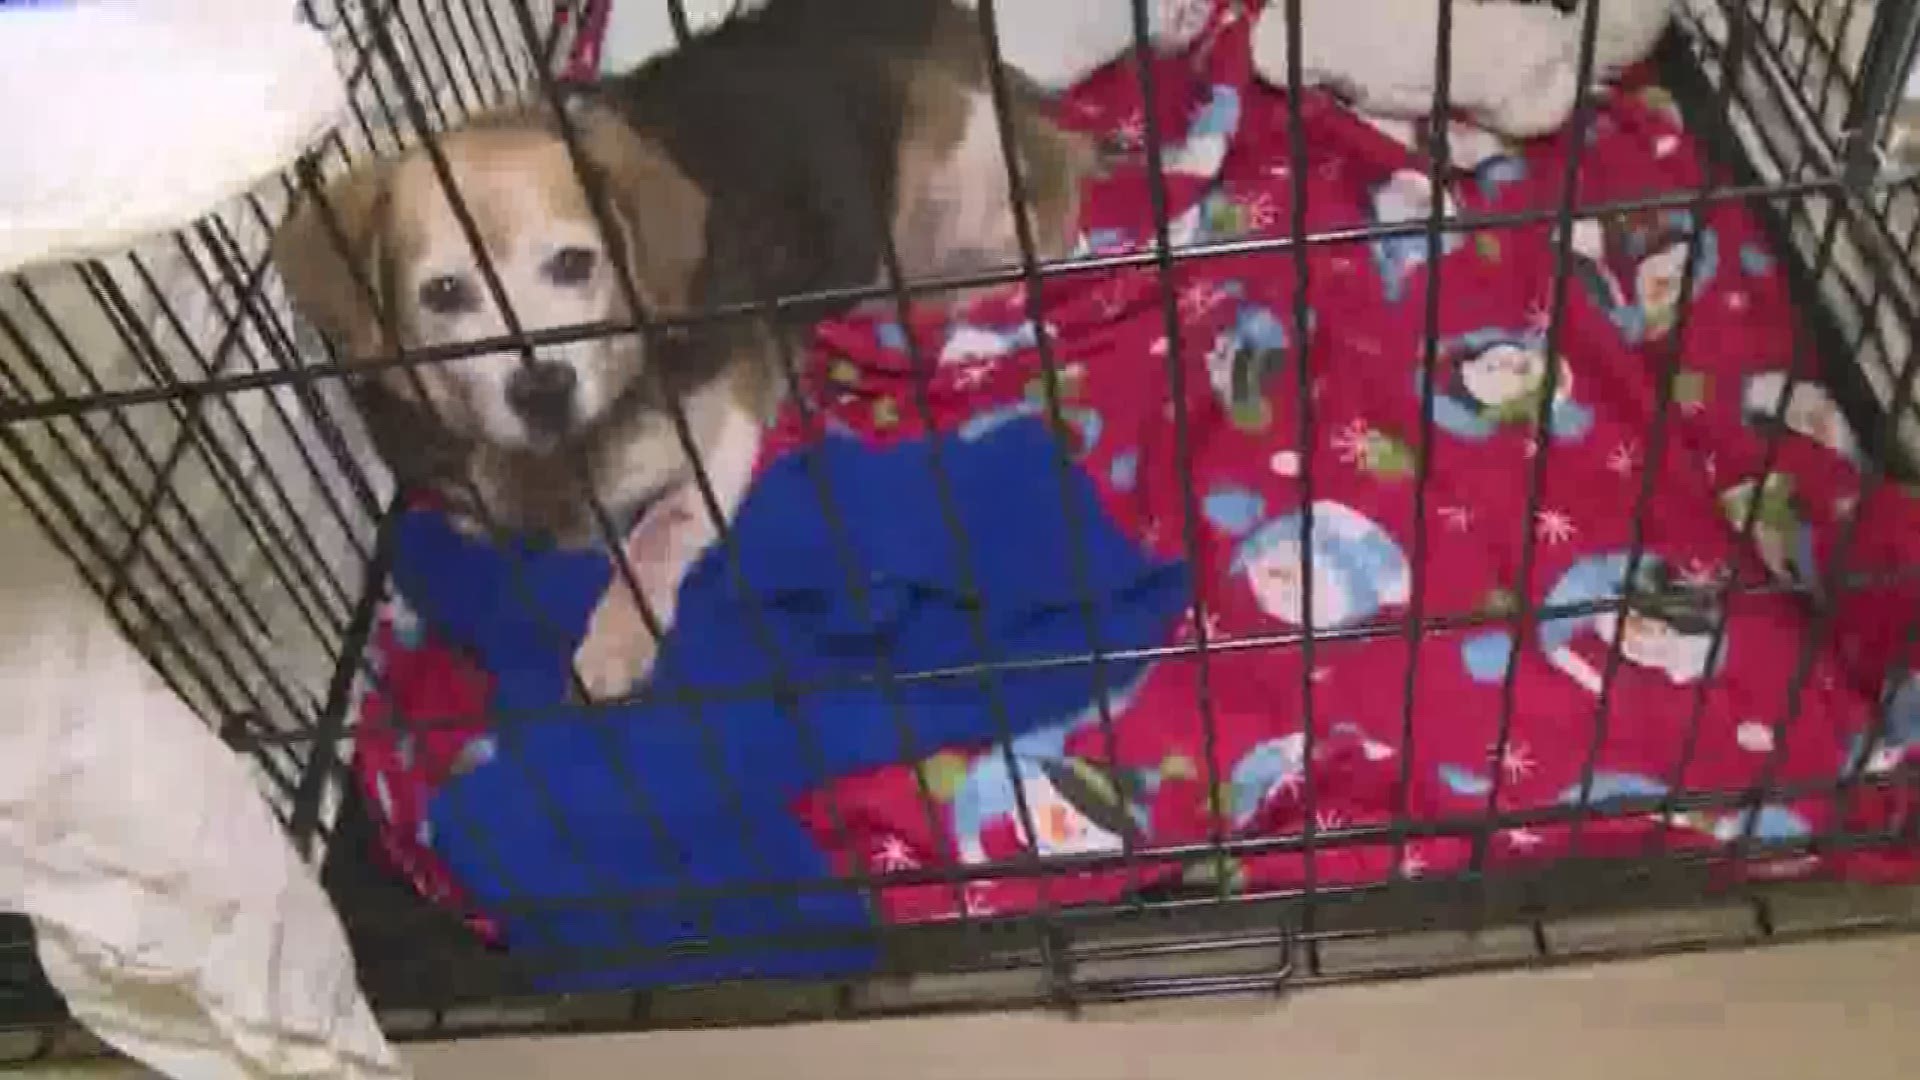 70 Dogs Taken To Animal Shelter In Winston-Salem